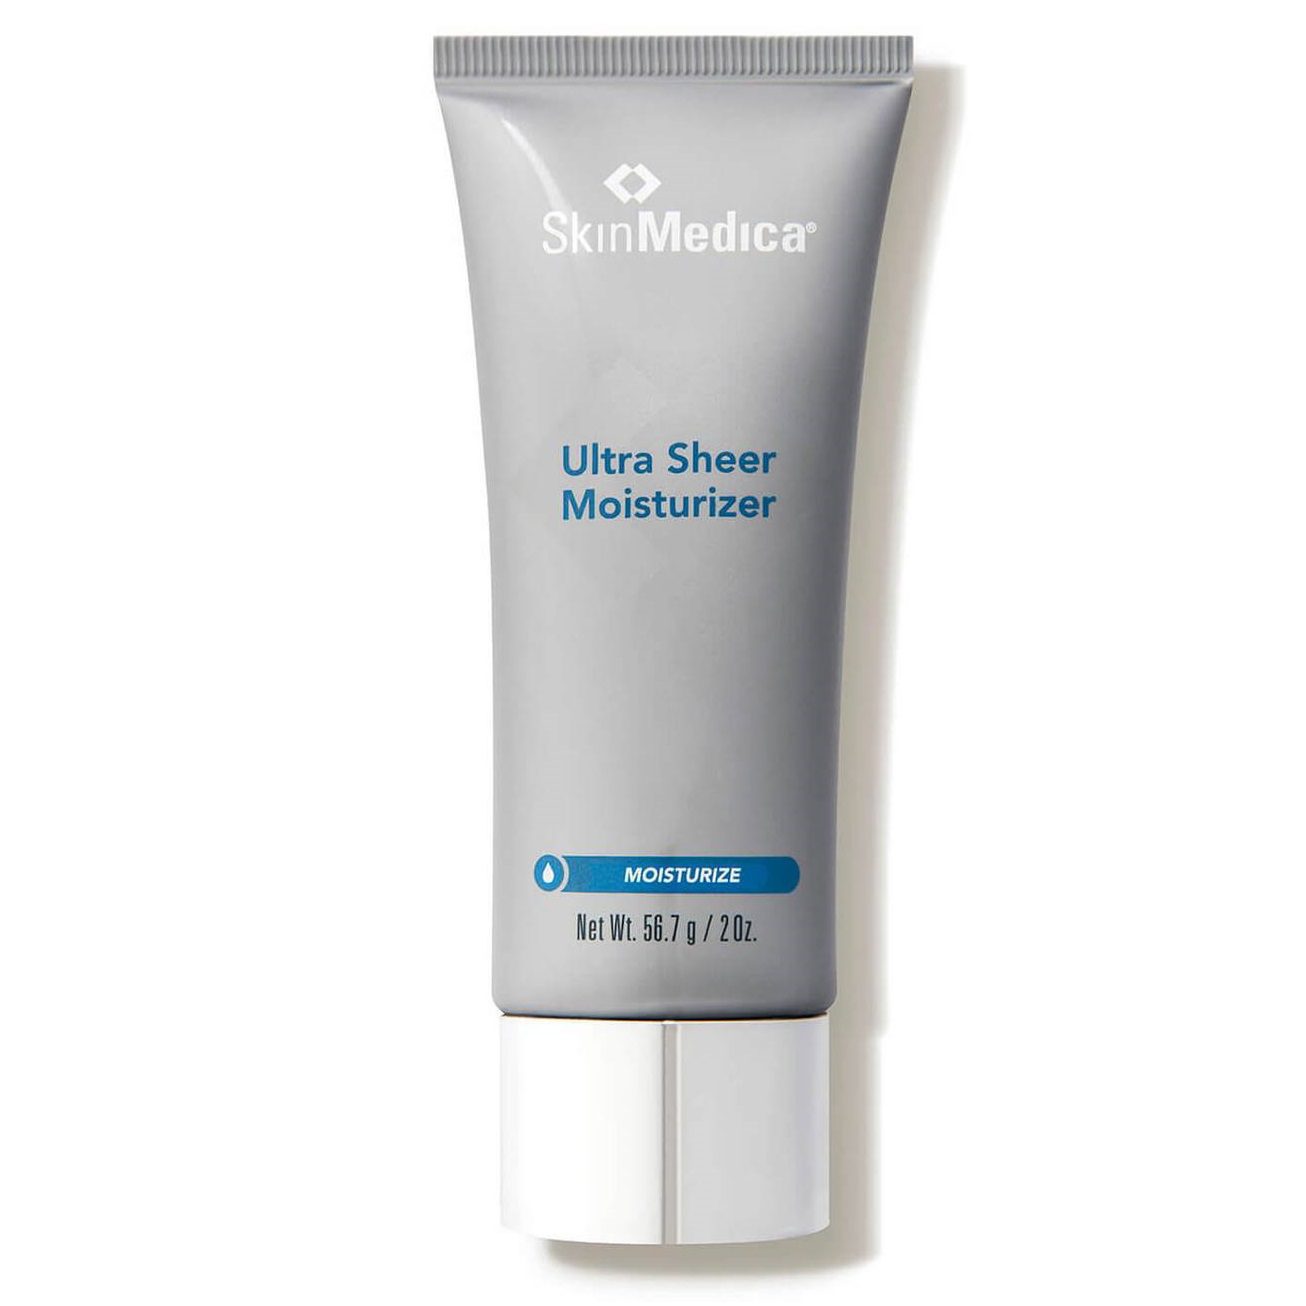 SkinMedica Ultra Sheer Moisturizer - Save Add'l 20% w/EasySave.